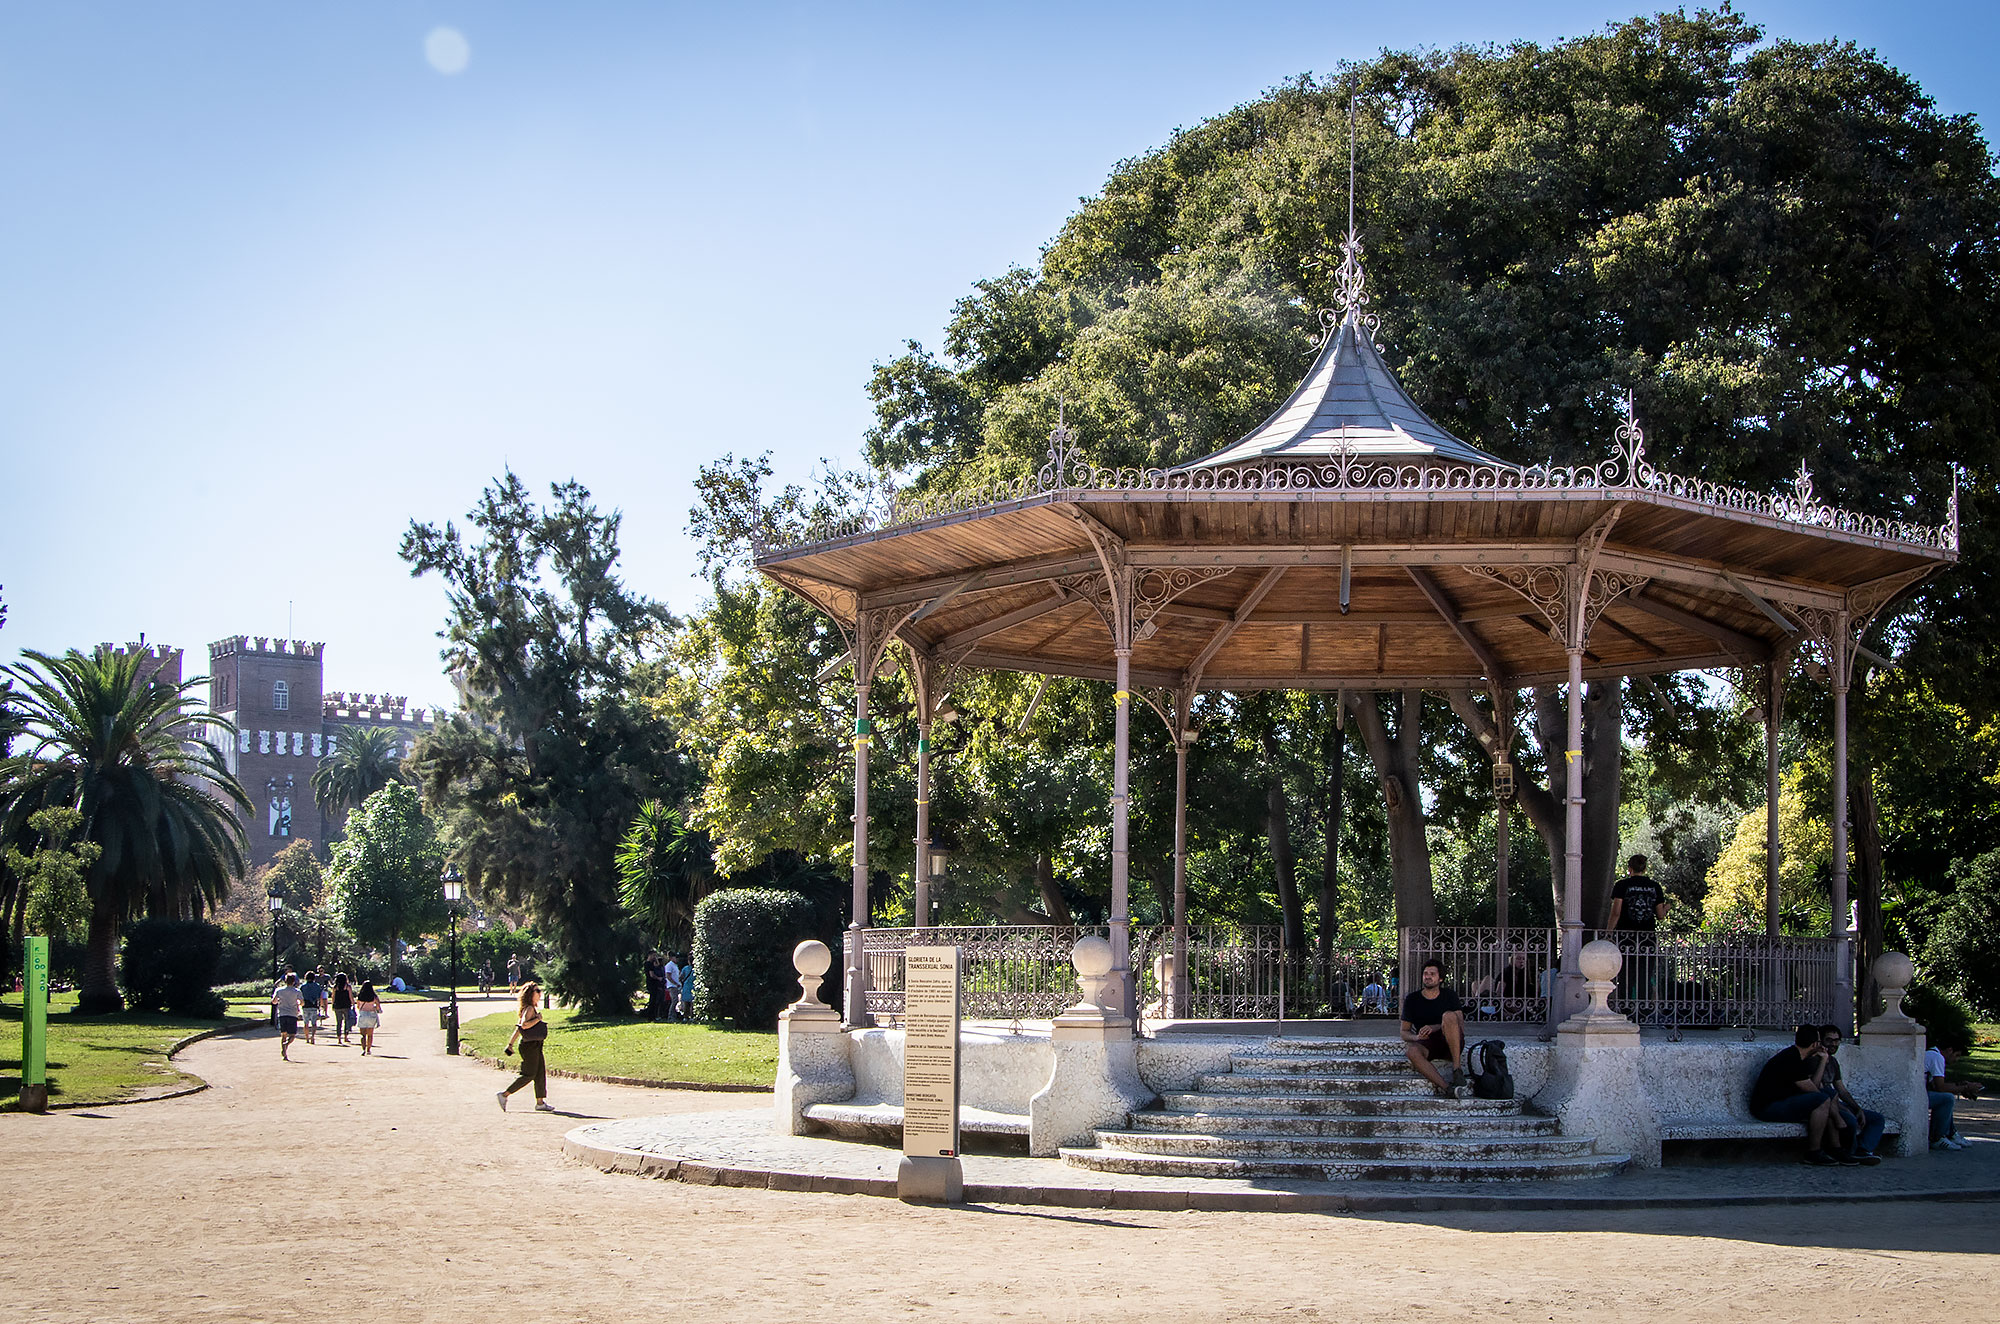   Ciutadella-parken i Barcelona